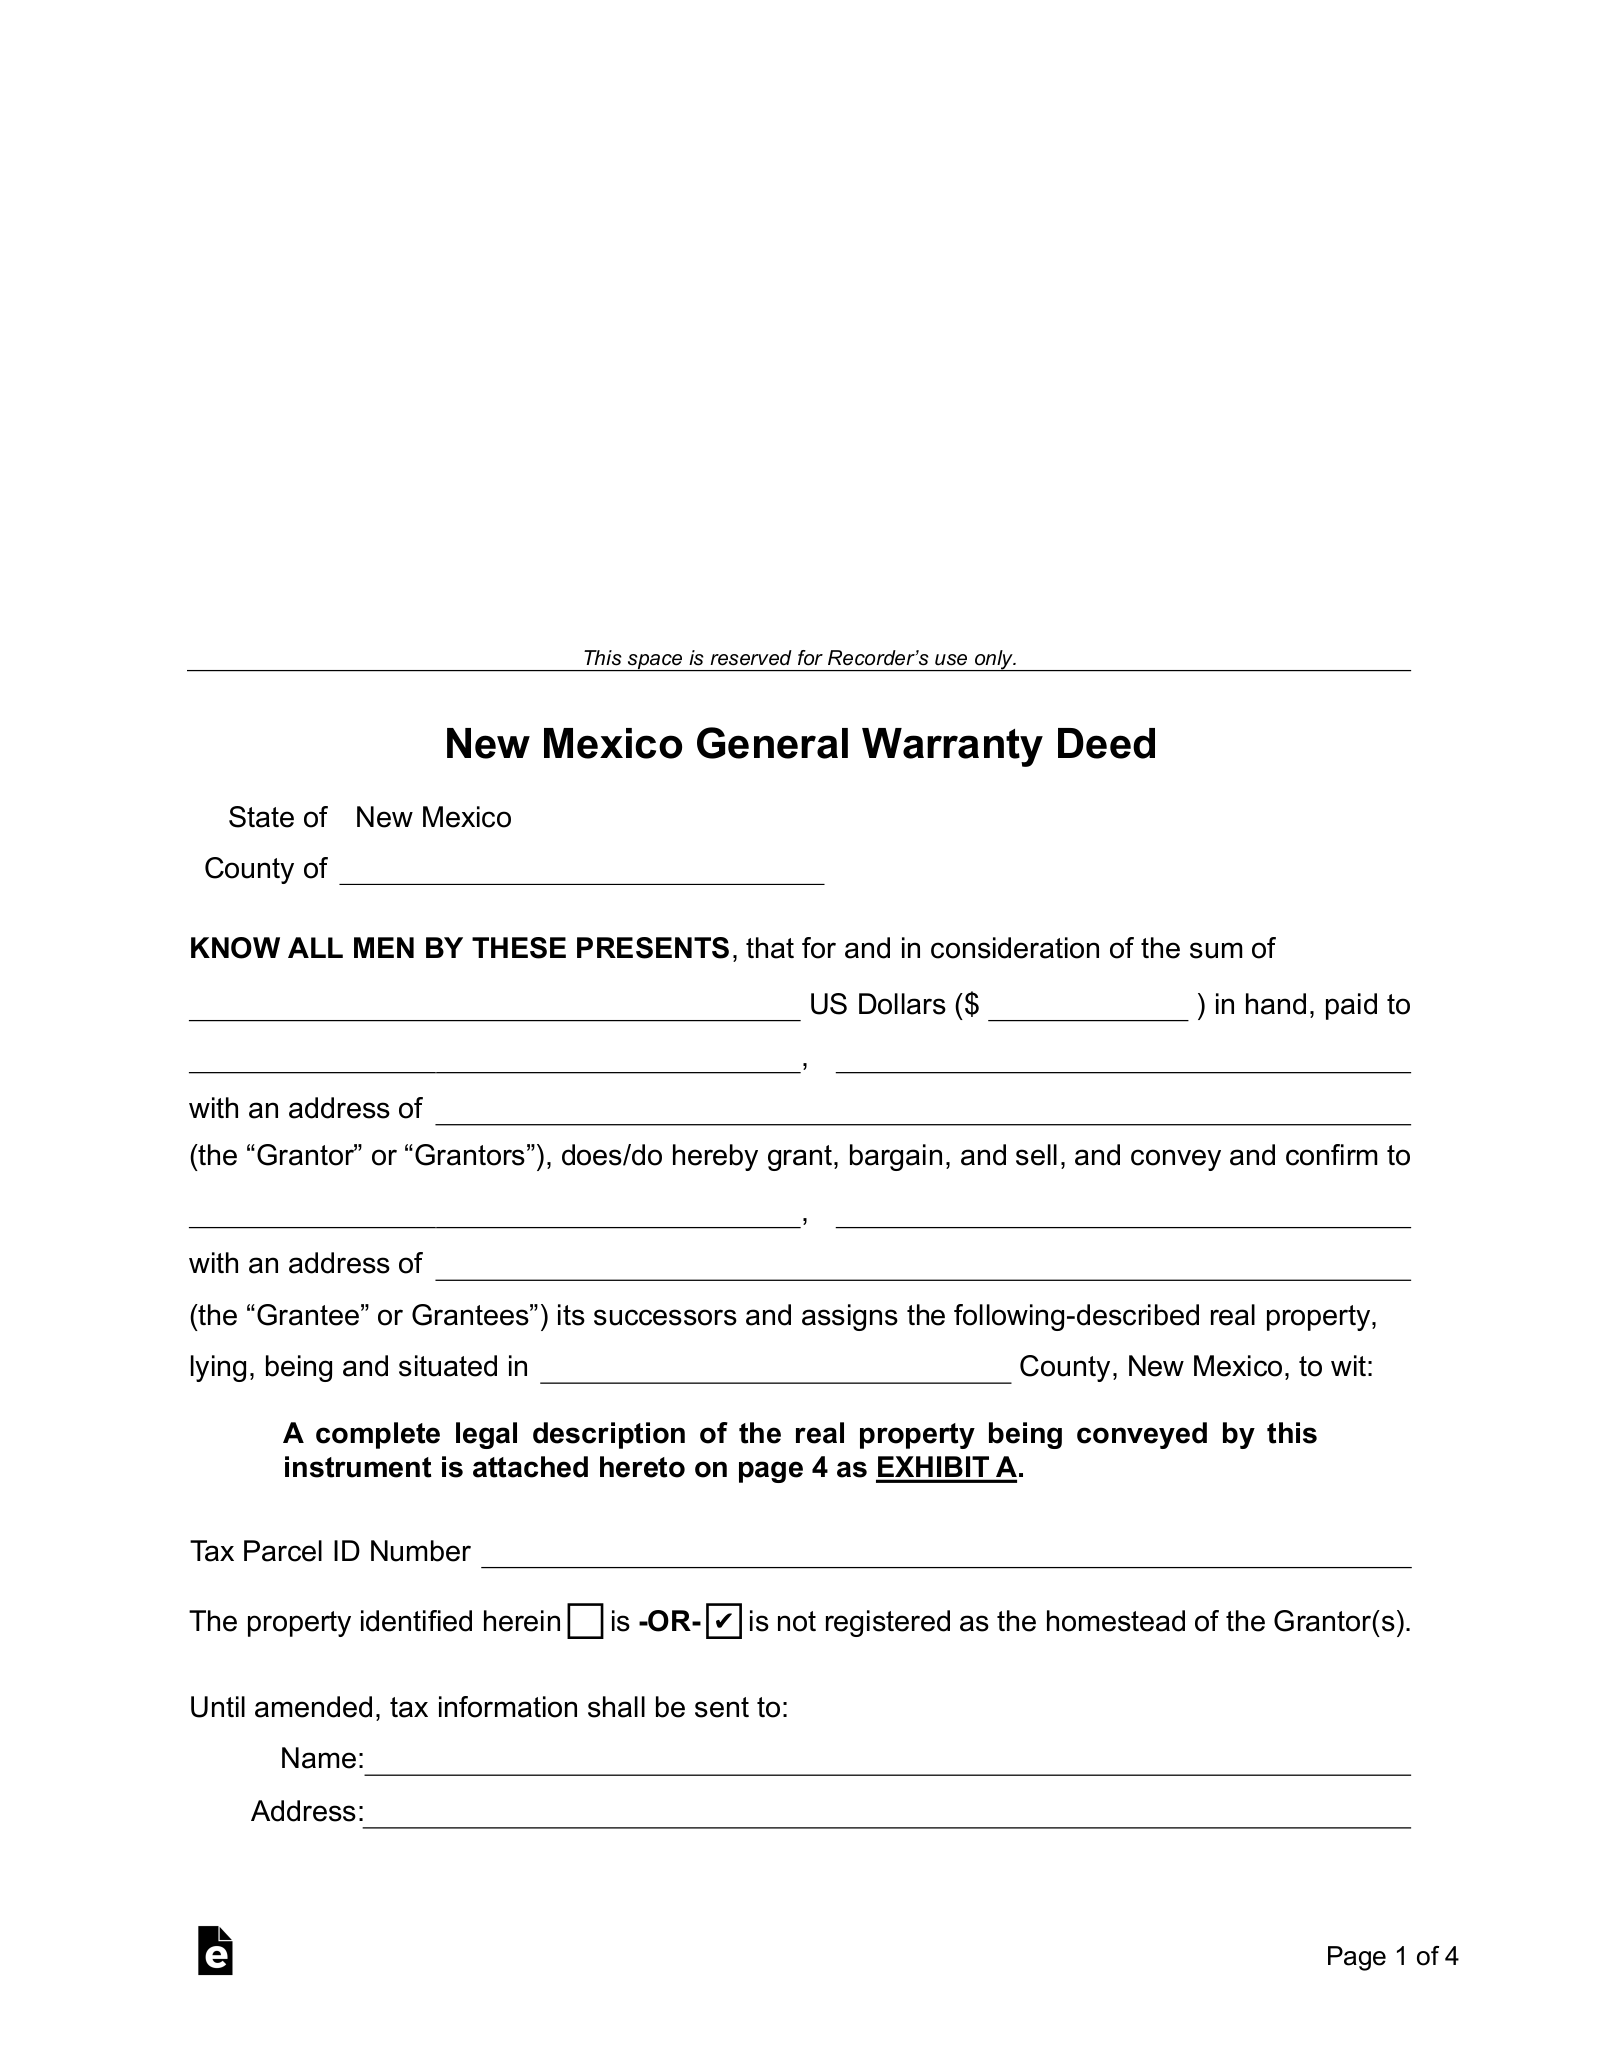 New Mexico General Warranty Deed Form